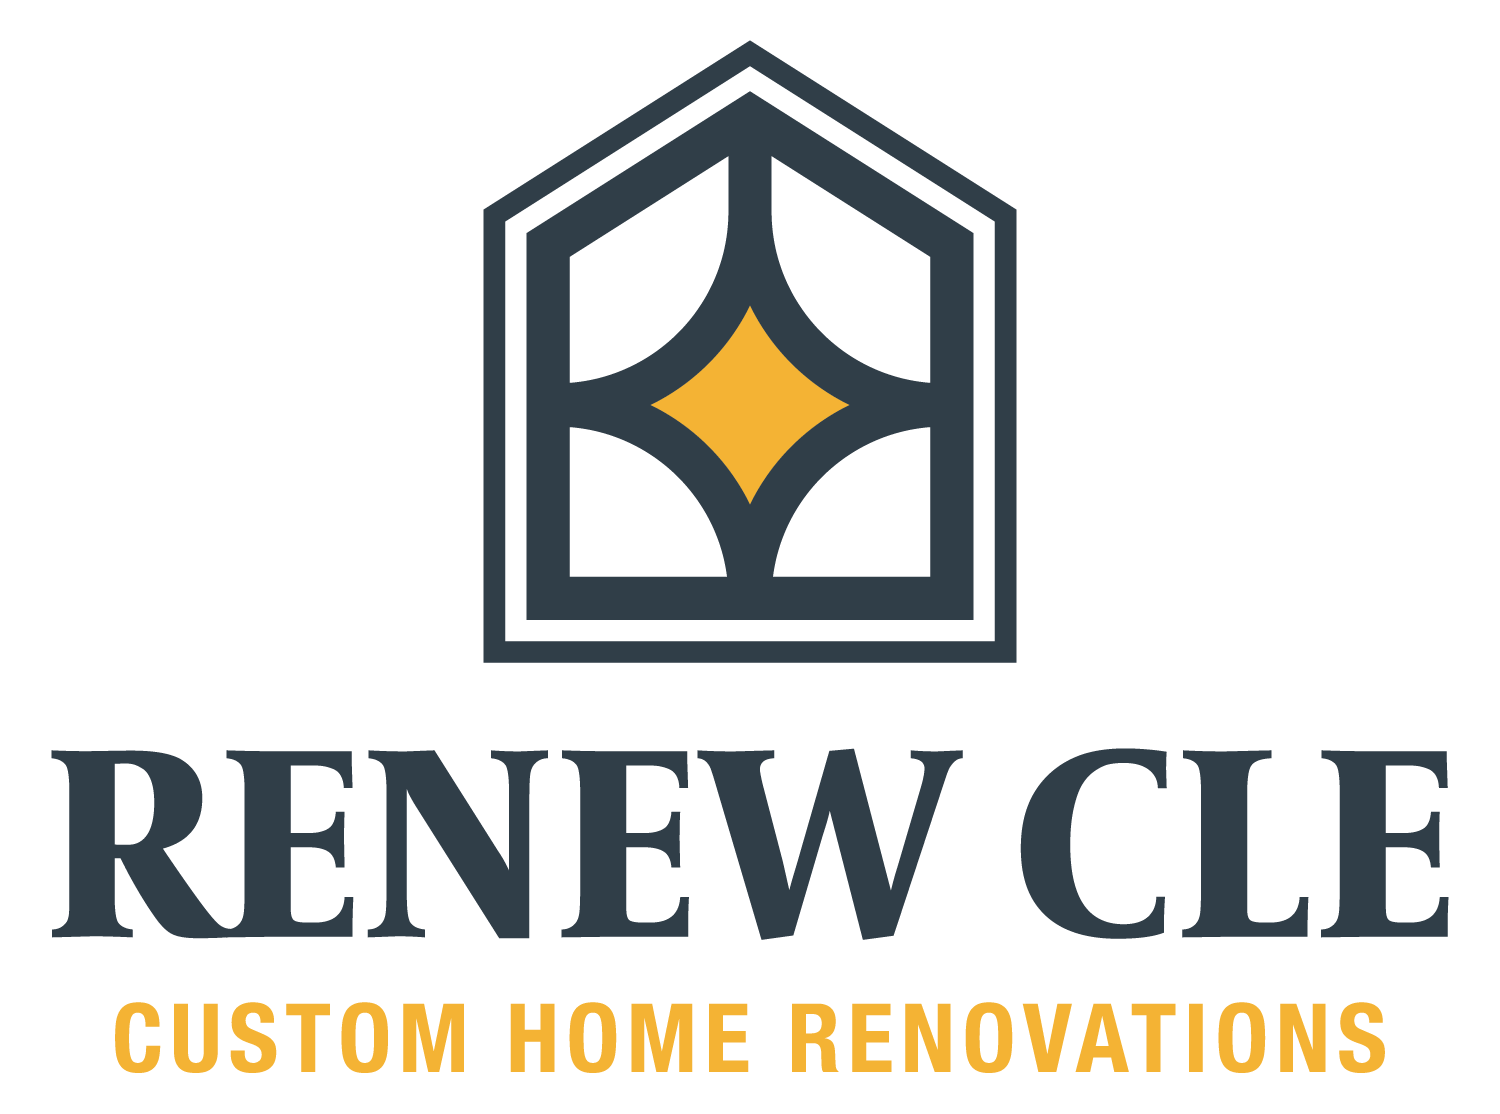 Renew CLE - Custom Home Renovations